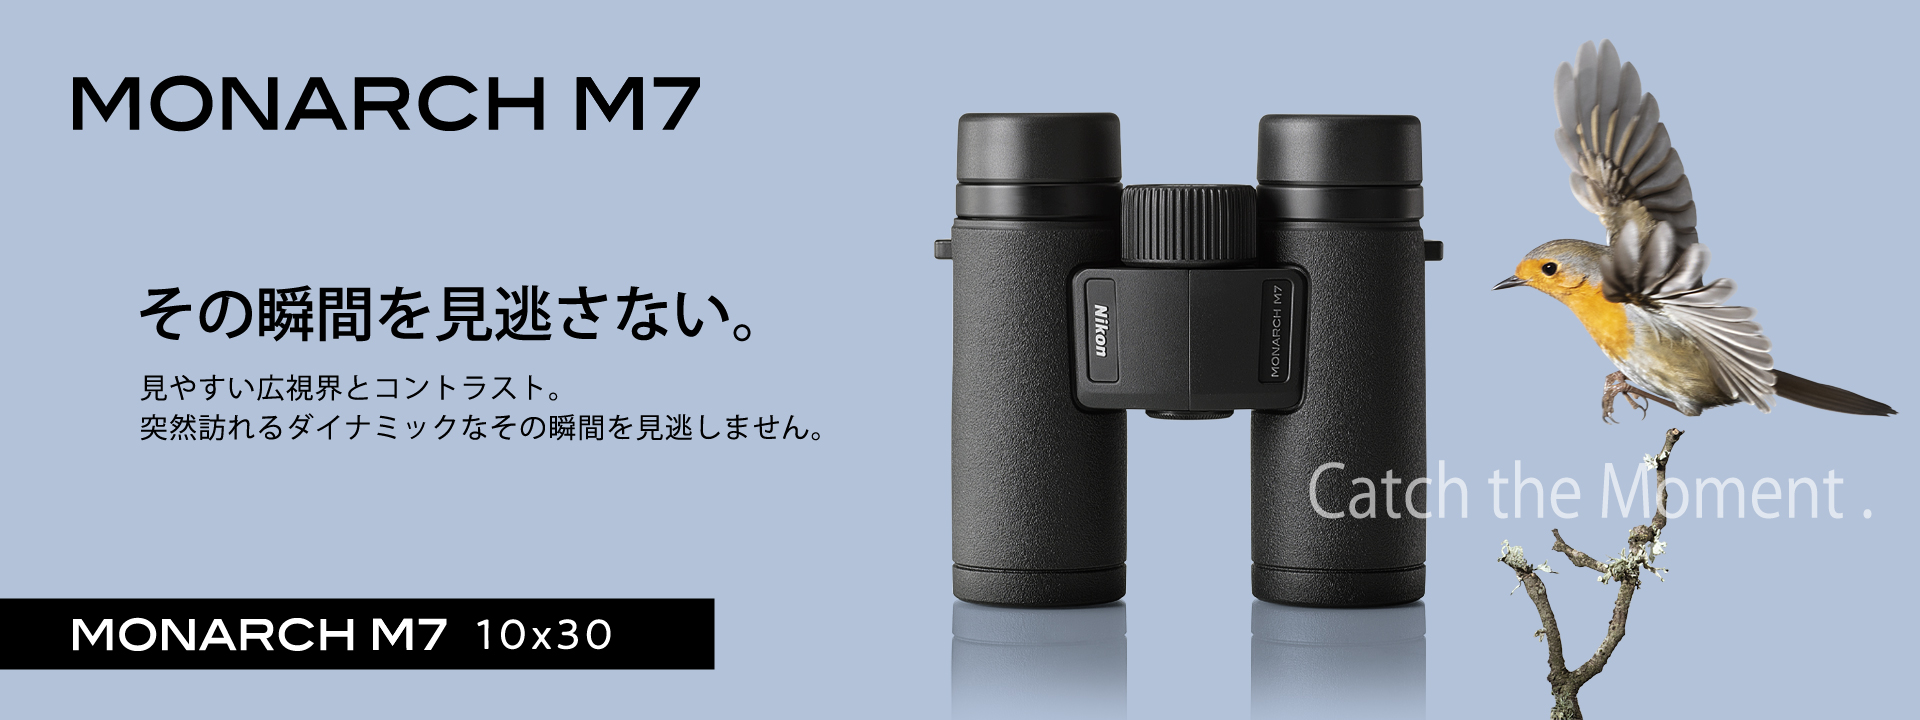 MONARCH M7 10x30 - 概要 | 双眼鏡・望遠鏡・レーザー距離計 | ニコンイメージング